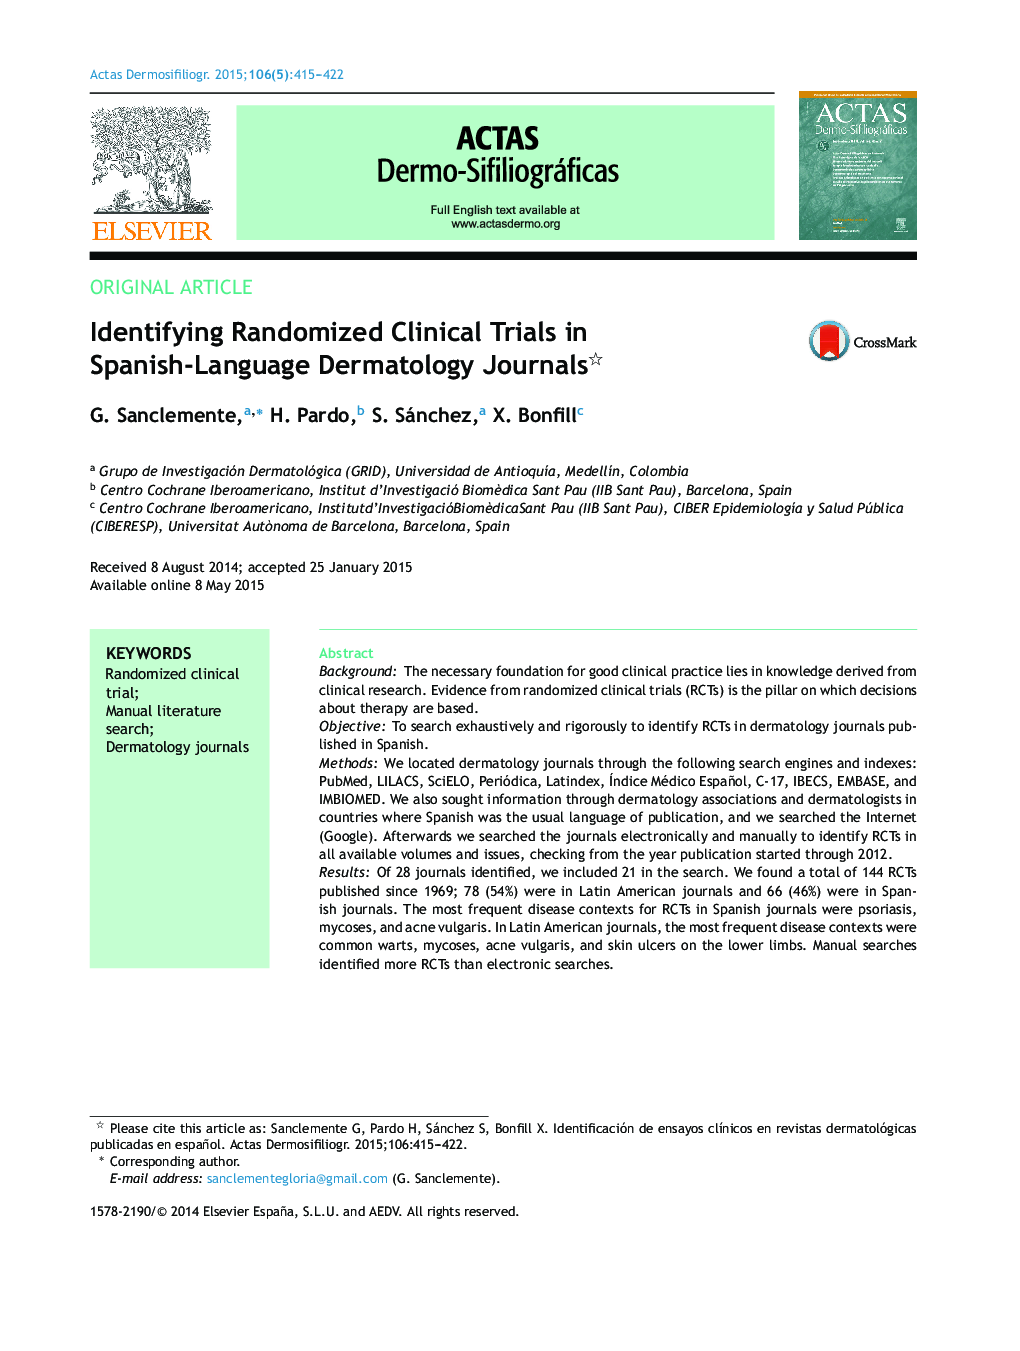 Identifying Randomized Clinical Trials in Spanish-Language Dermatology Journals 